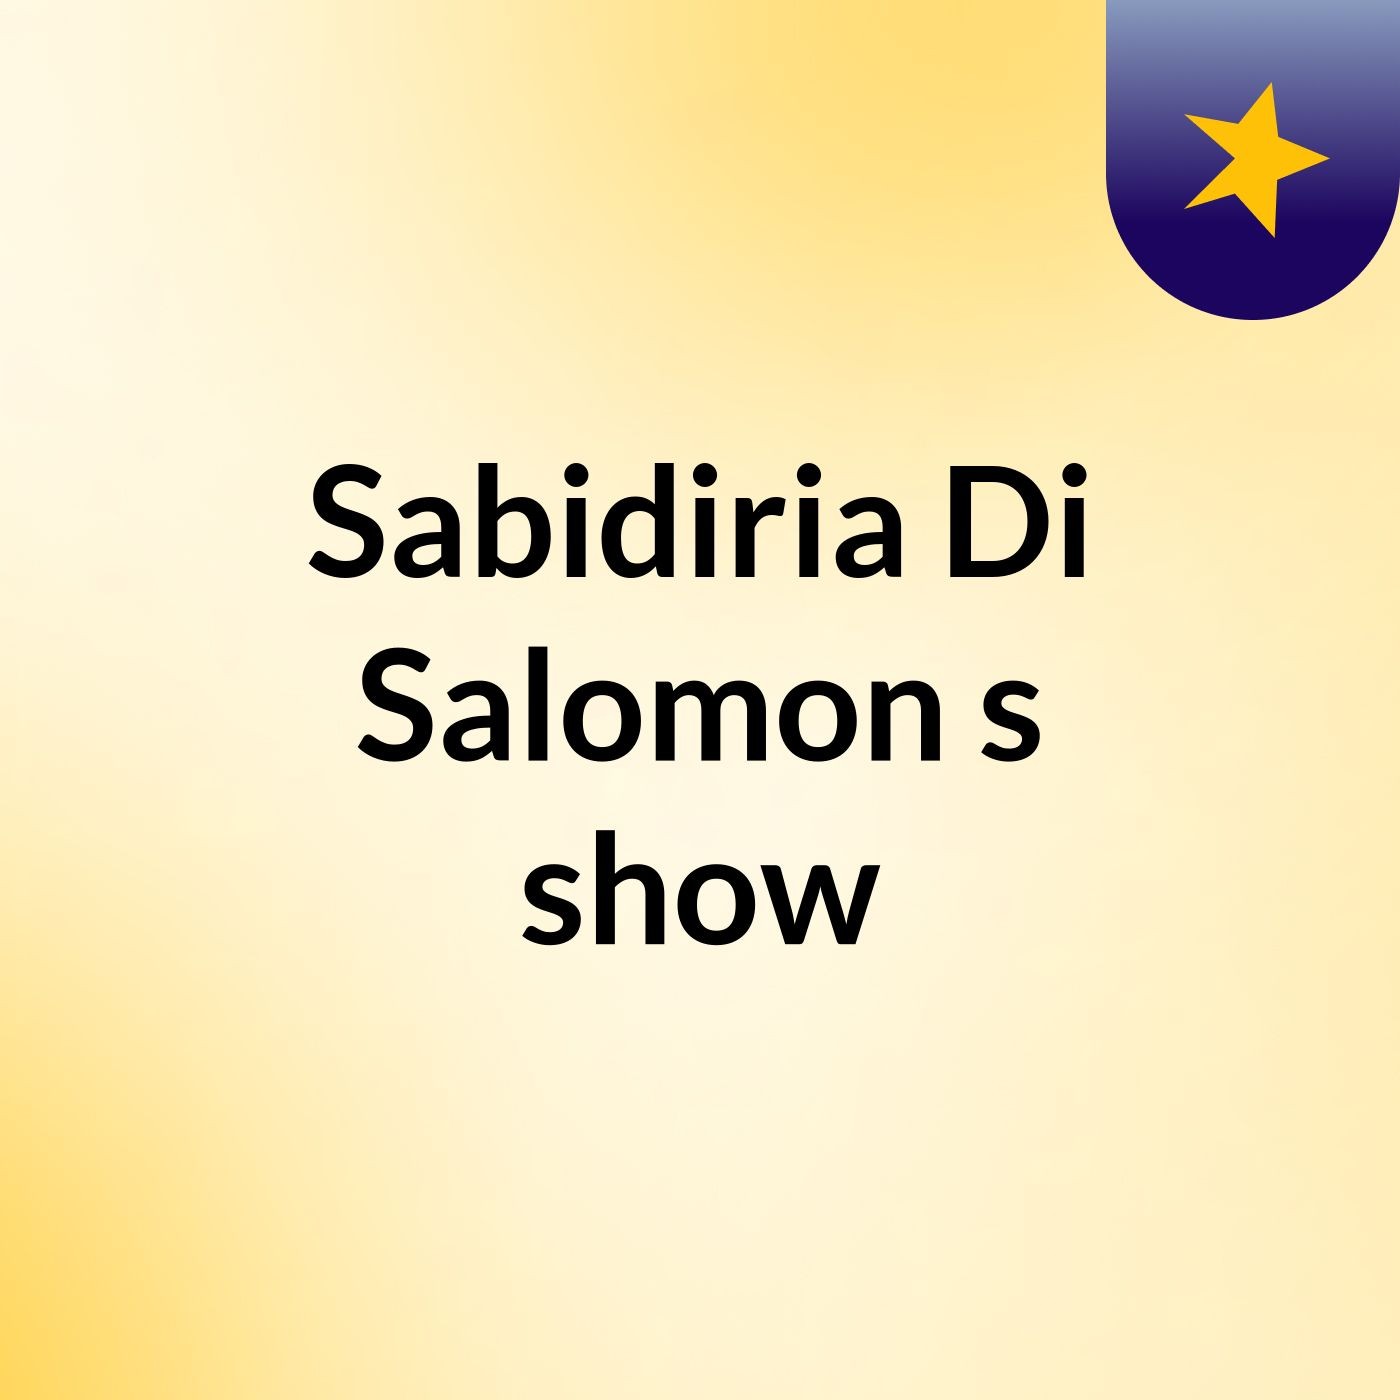 Sabidiria Di Salomon's show